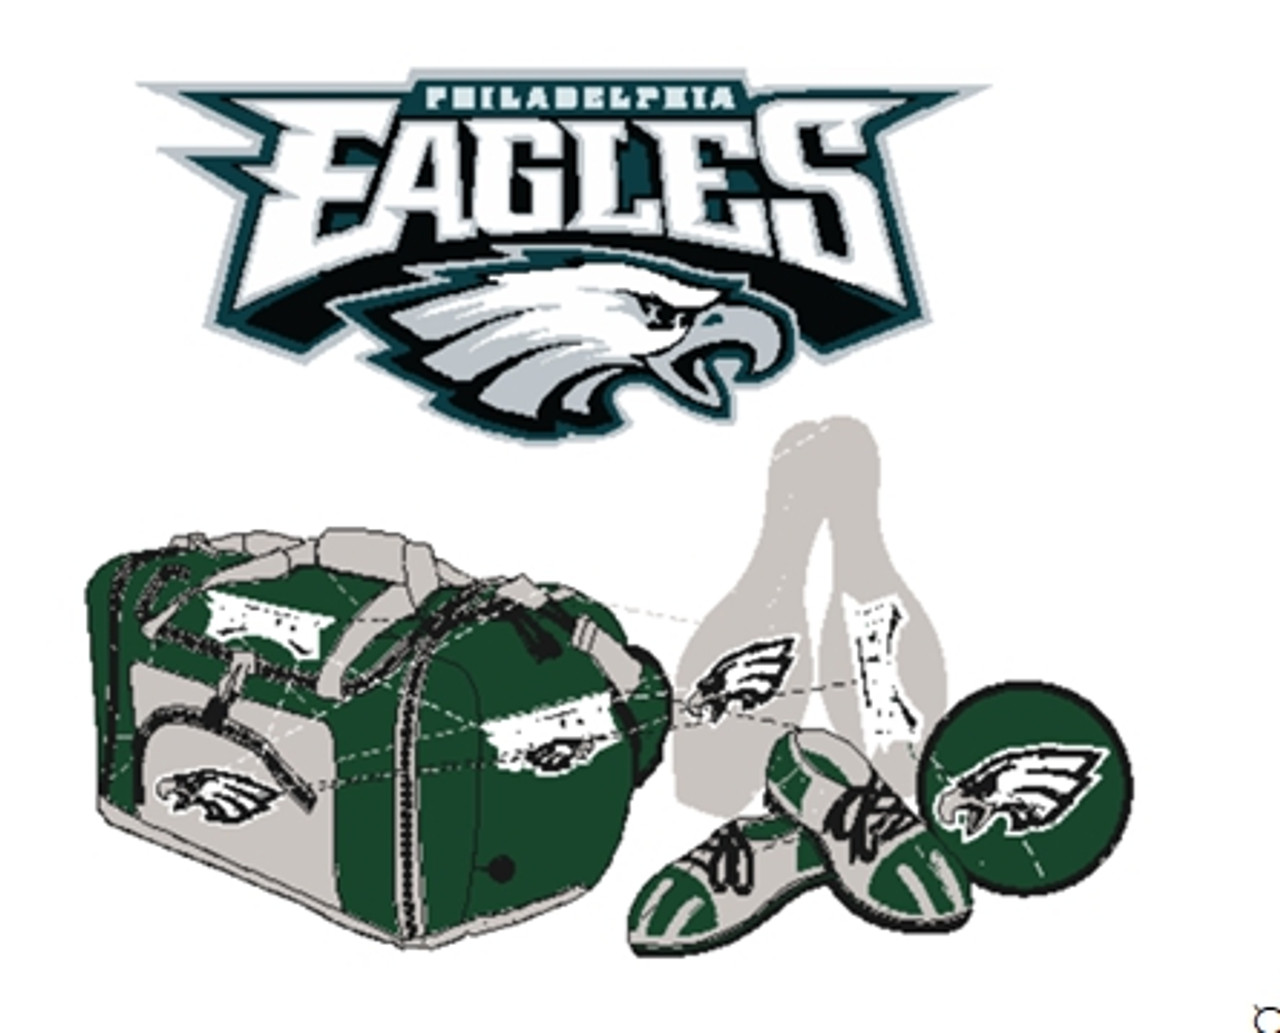 Philadelphia Eagles Bowling Gear Design - Jordan Concepts LLC